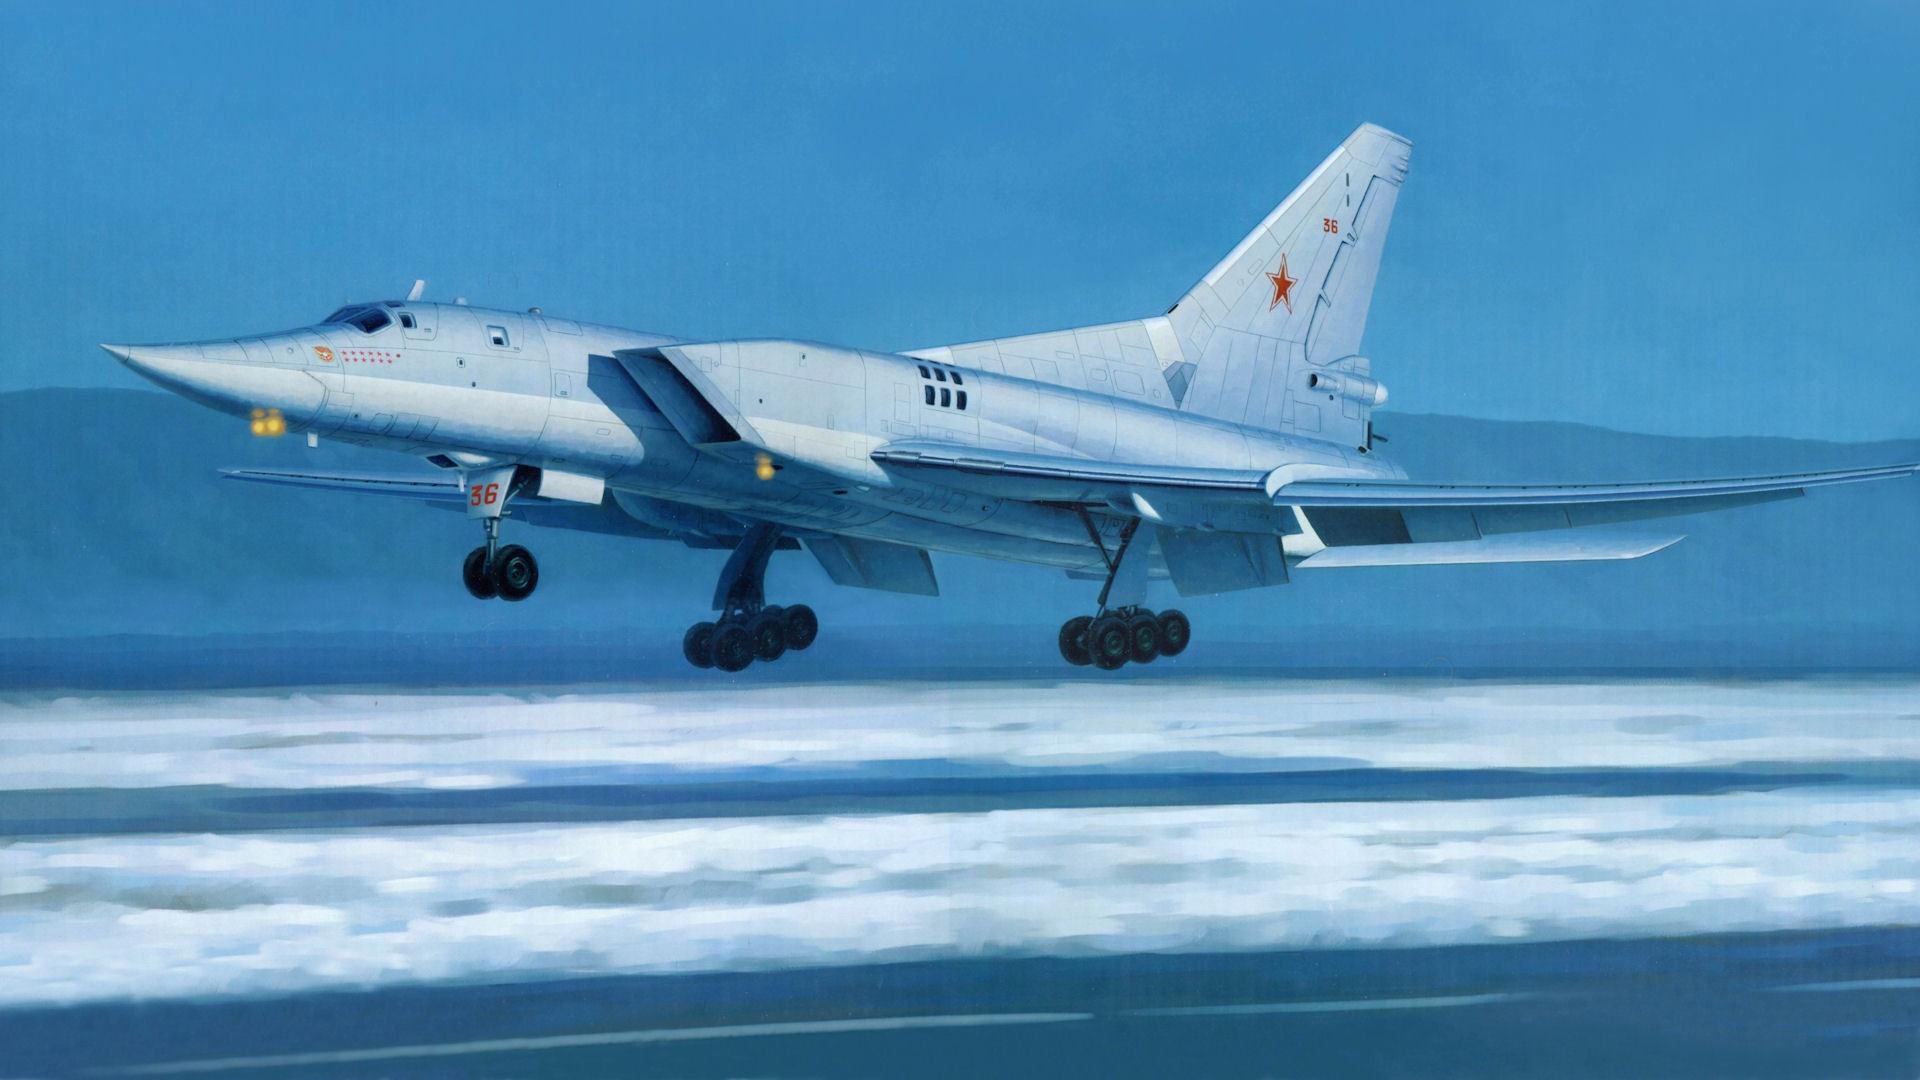 aircraft-military-artwork-tupolev-tu-22m-1920x1080-56870.jpg